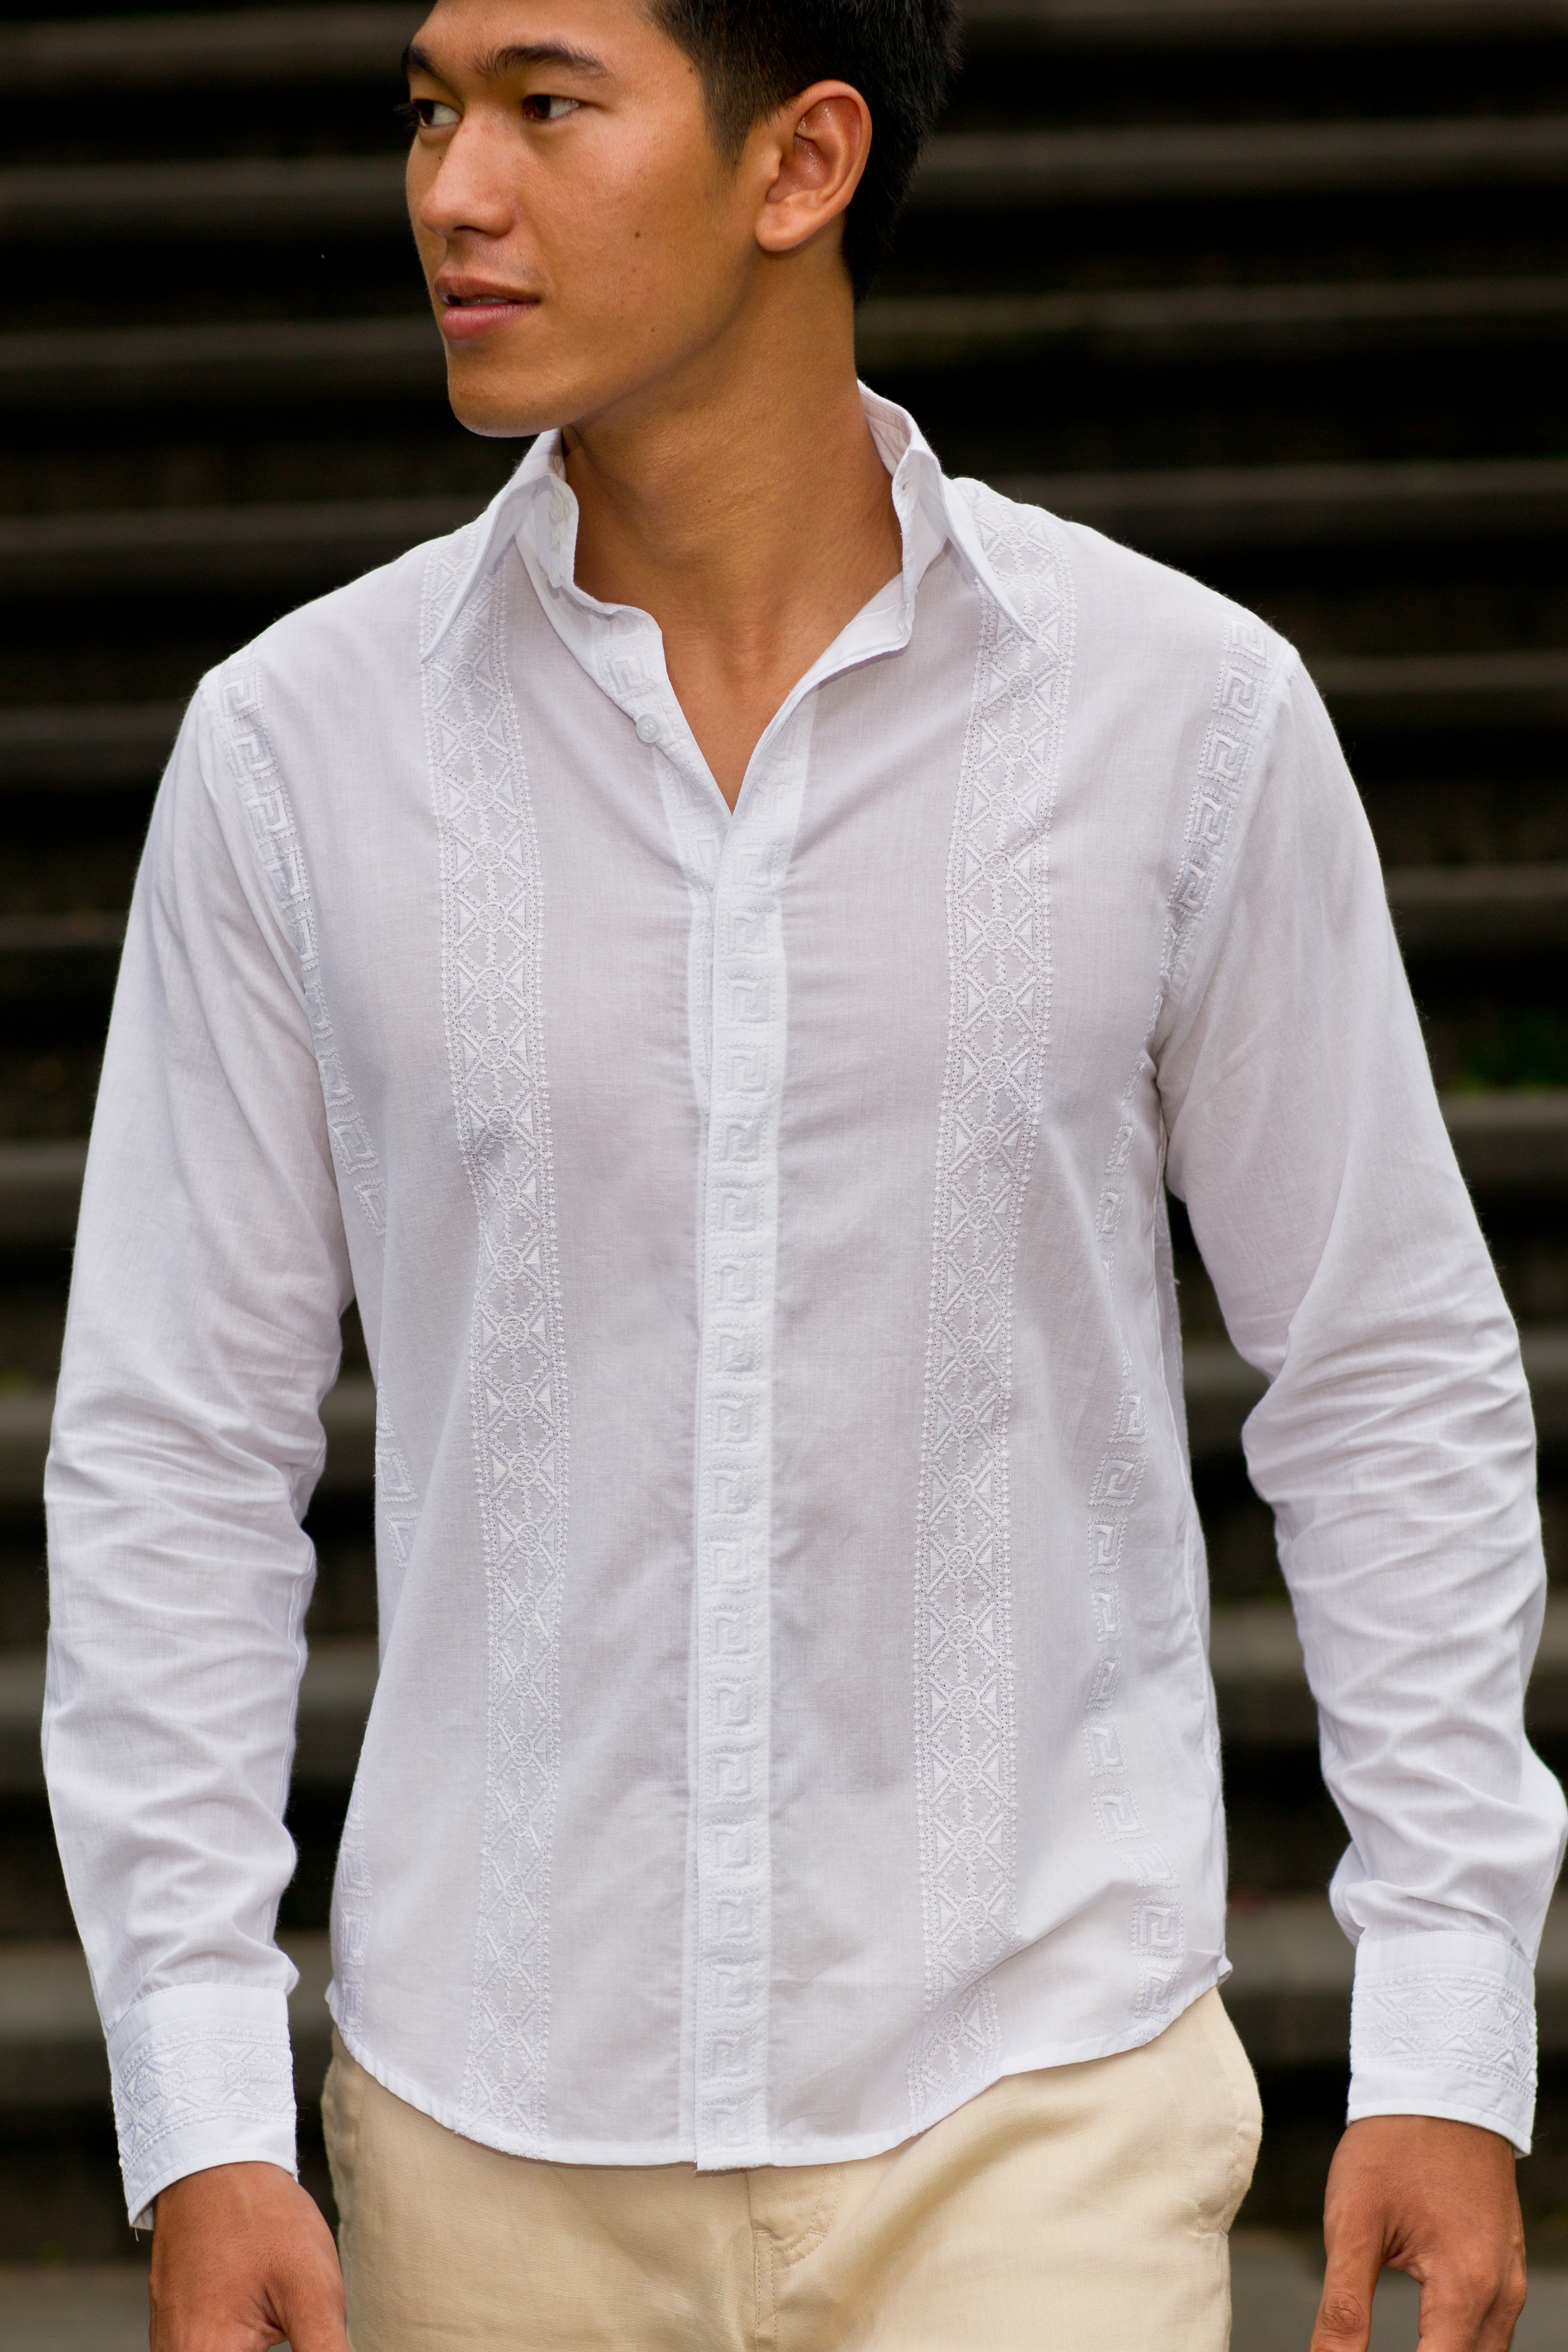 100% cotton slim fit shirt - Man